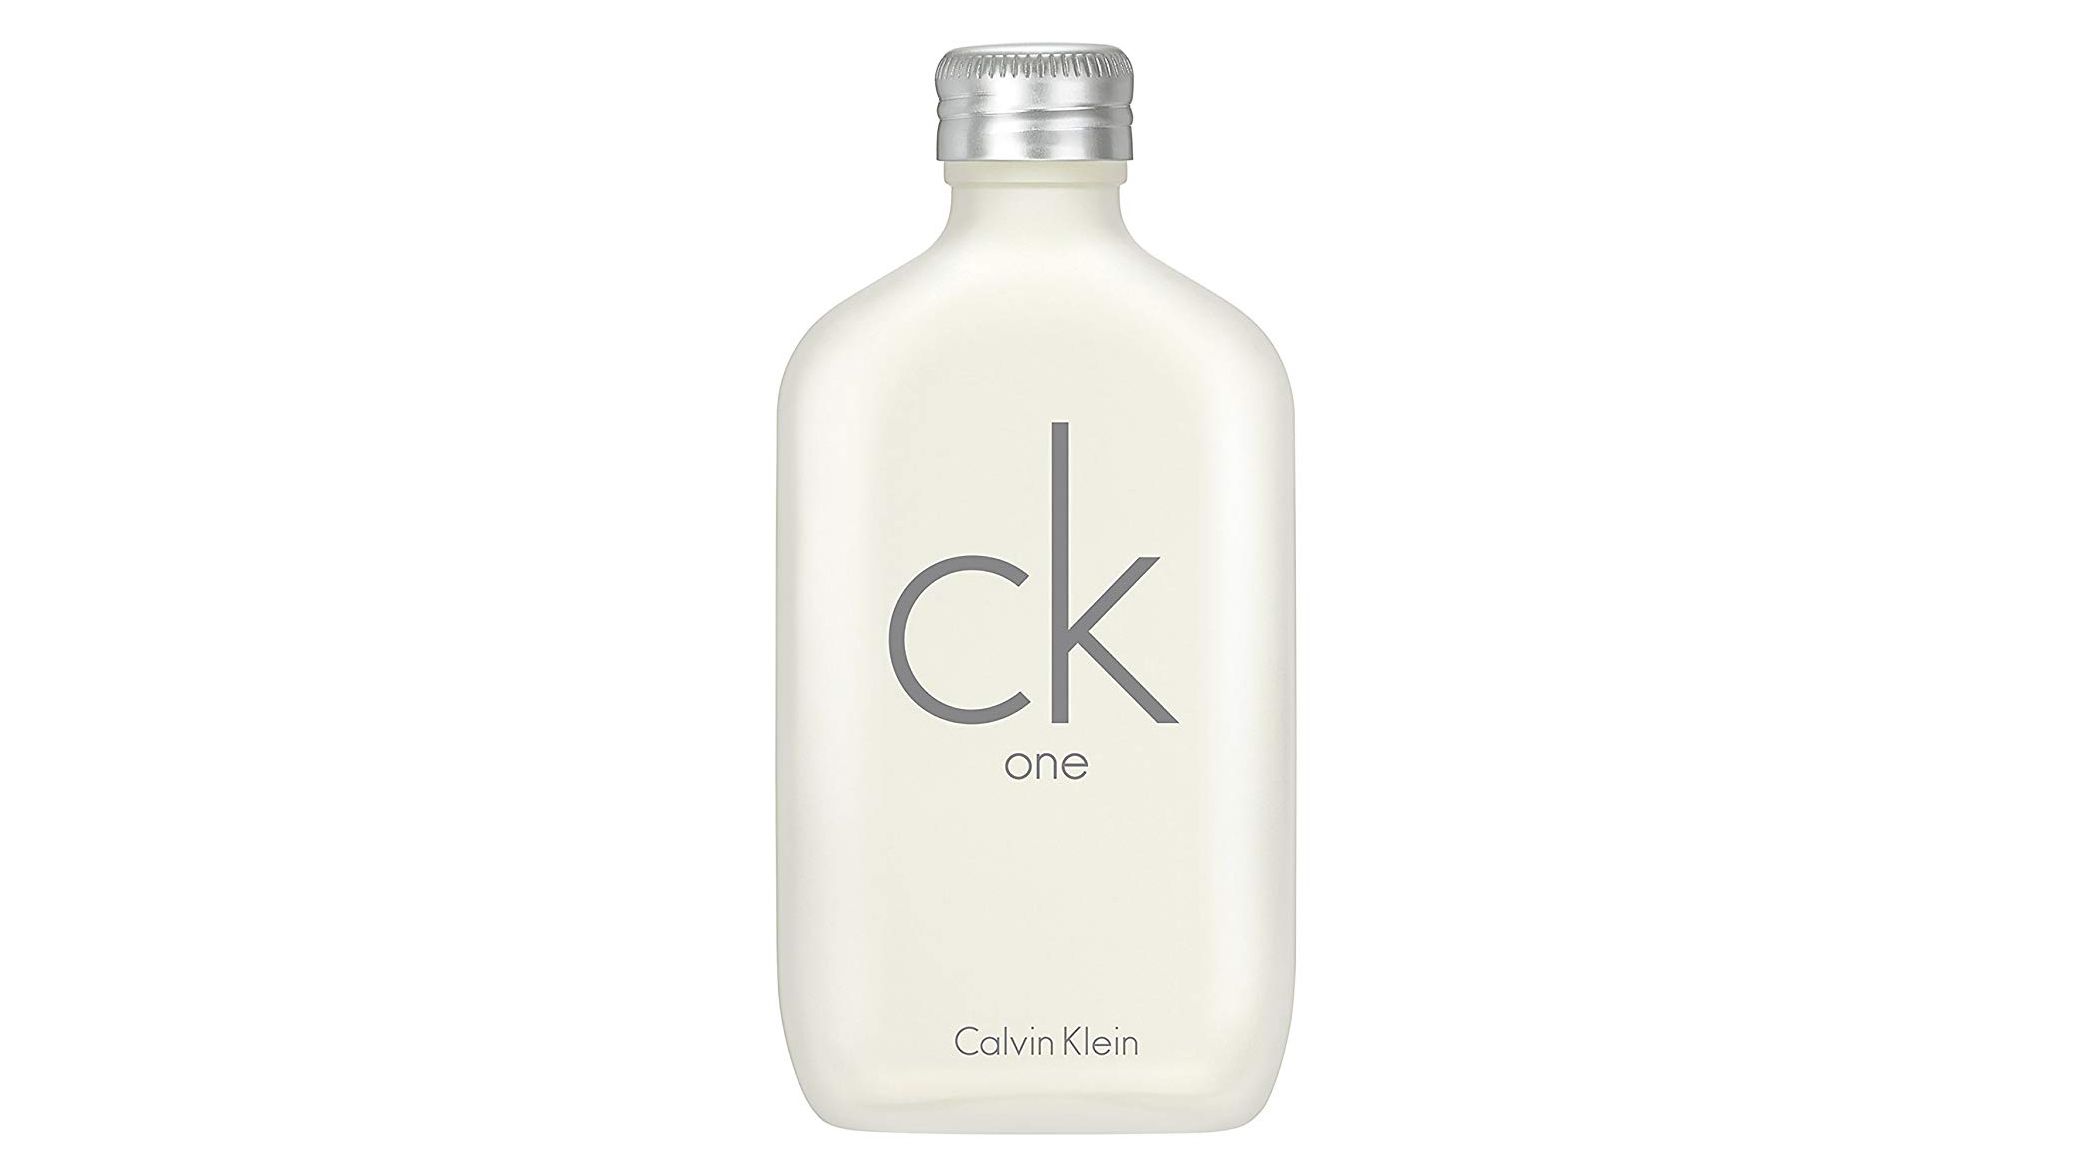 Melhores fragrâncias masculinas: Calvin Klein CK One Eau de Toilette